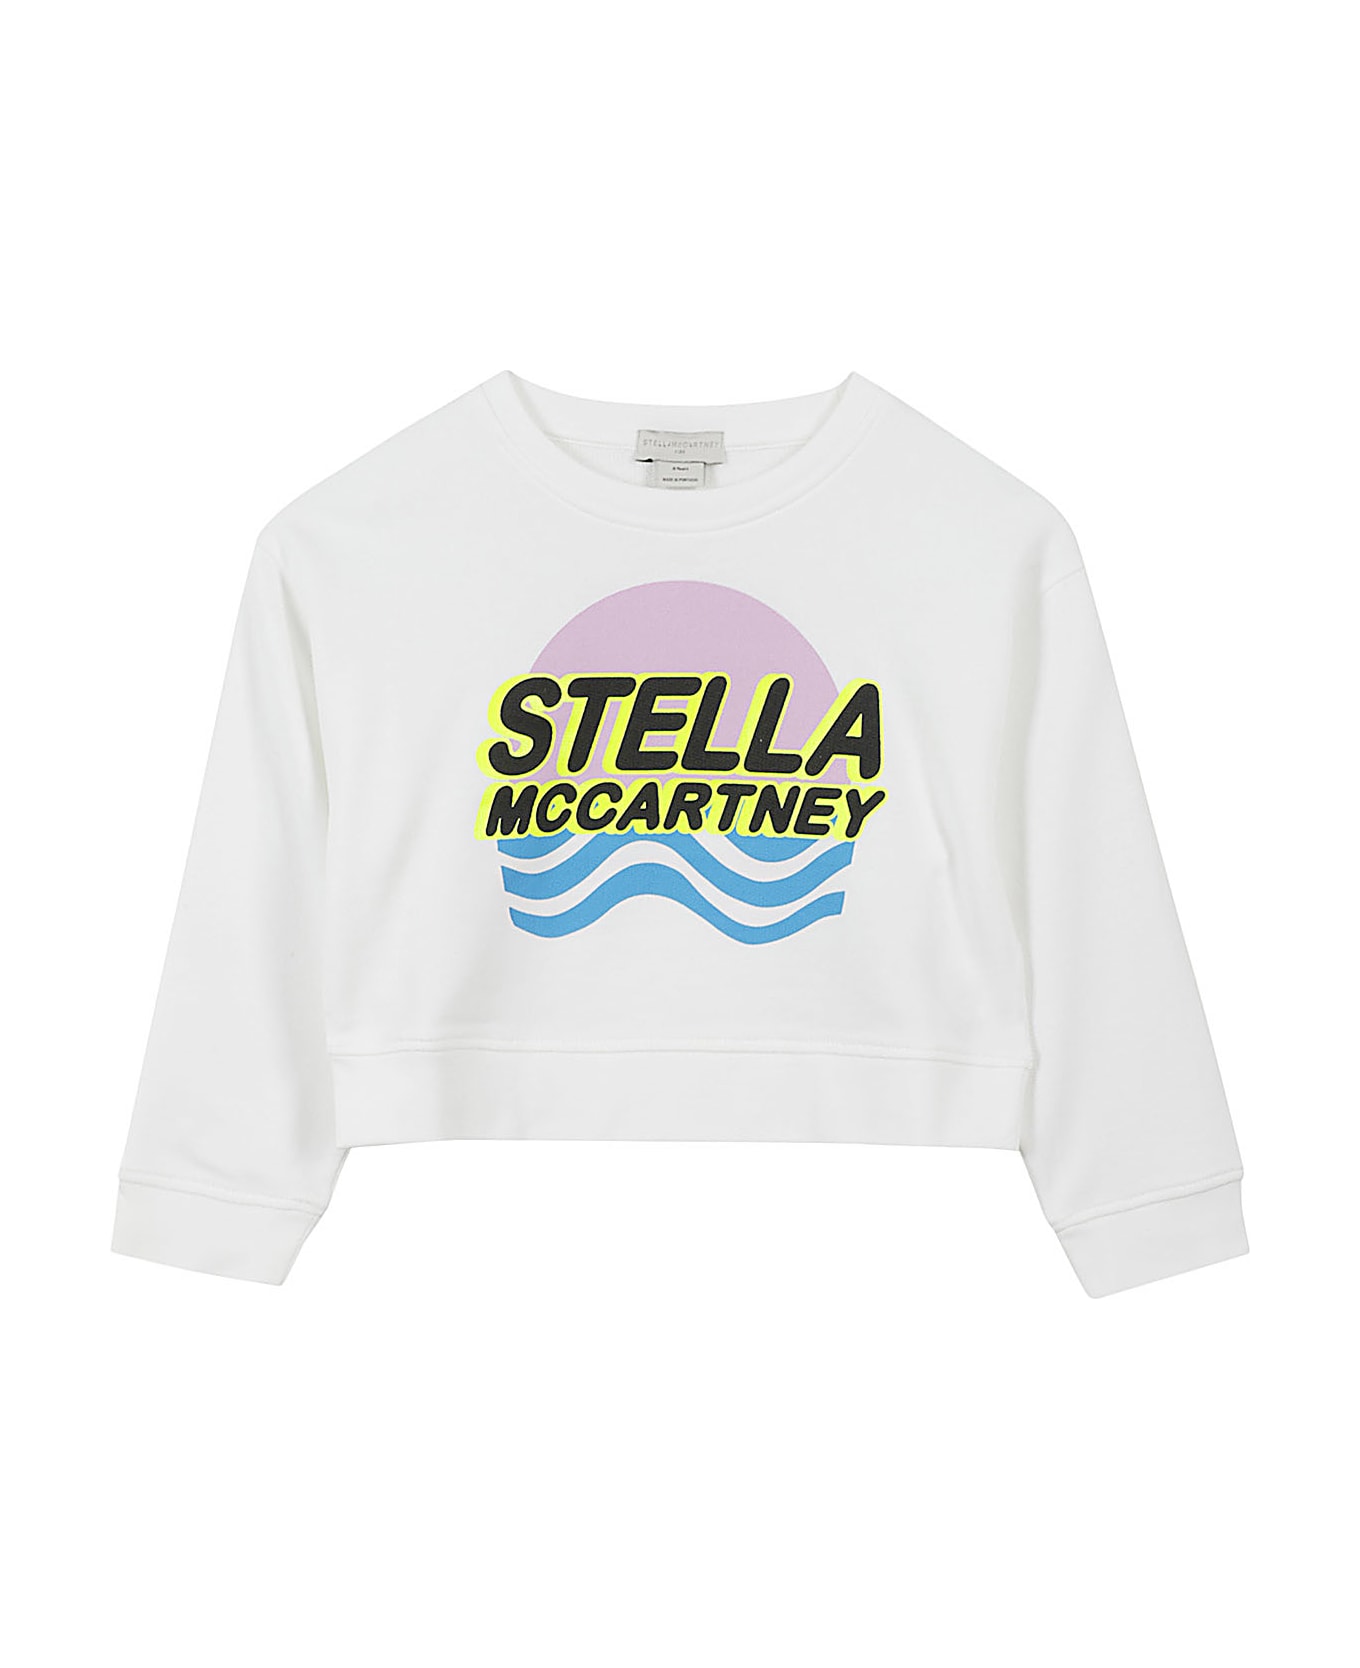 Stella McCartney Kids Sport - White